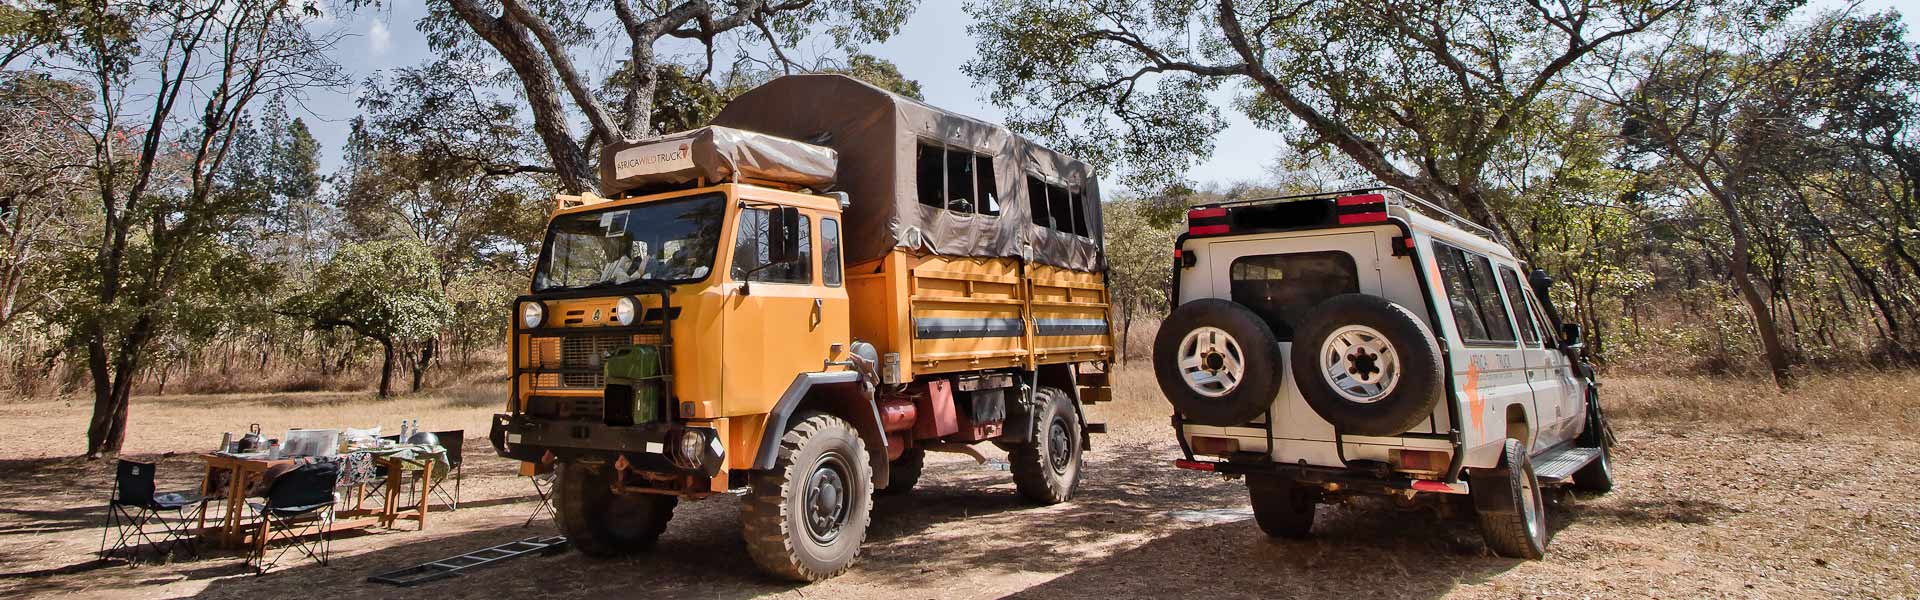 viaggi-in-Africa-in-programma-africa-tour-operator-4x4-veicoli